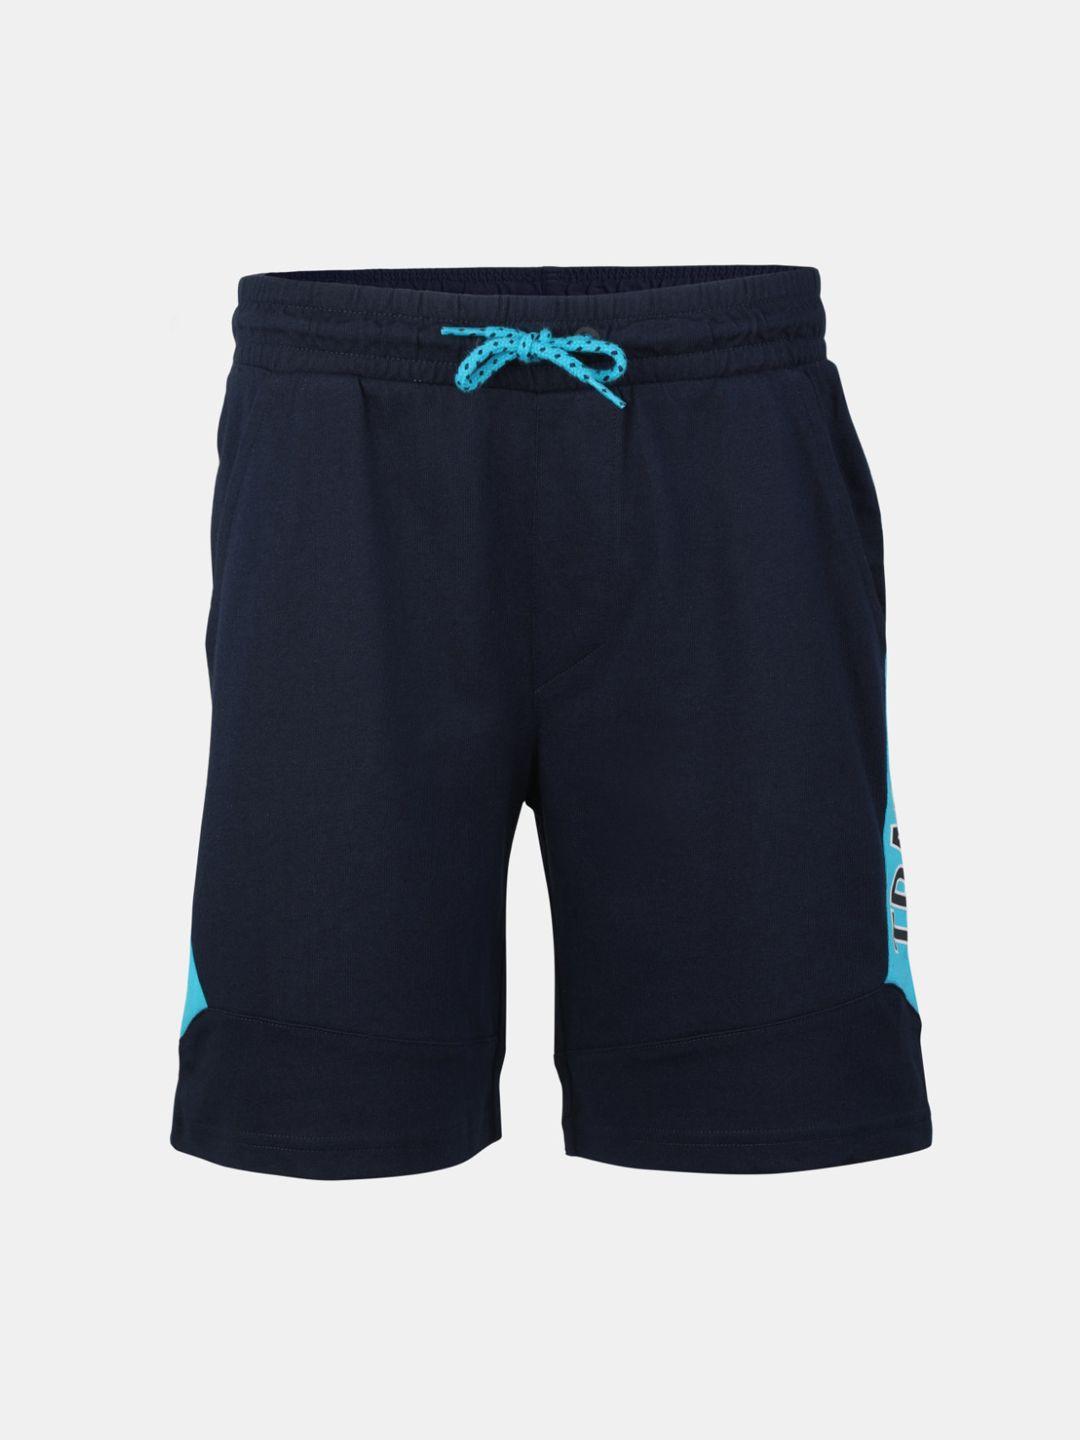 jockey boys navy blue shorts